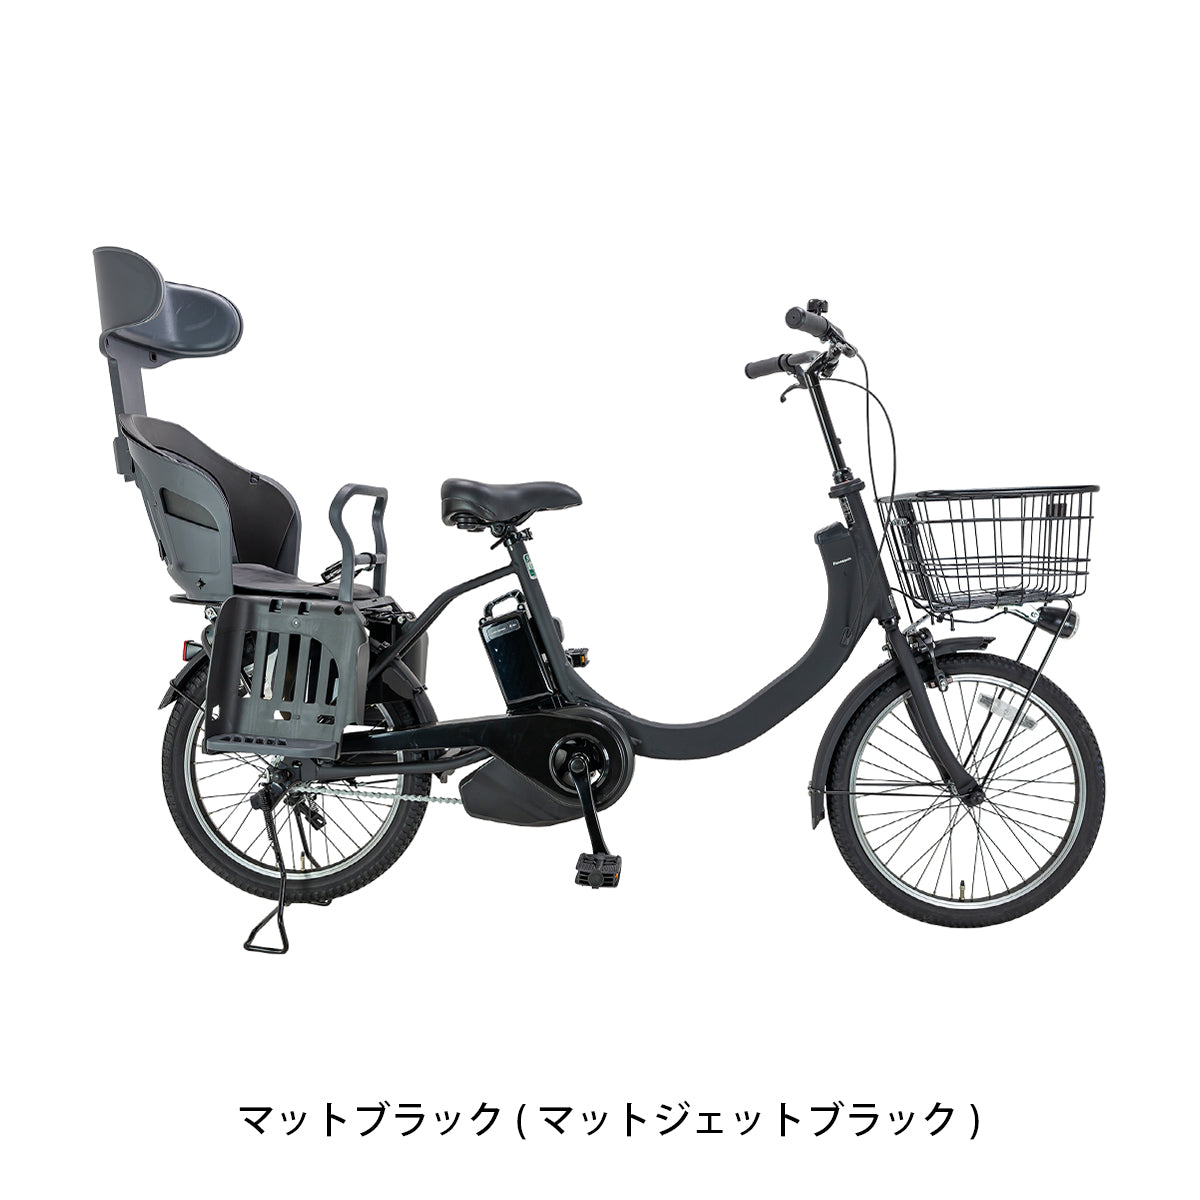 Panasonic子供乗せ電動アシスト自転車 - 電動アシスト自転車